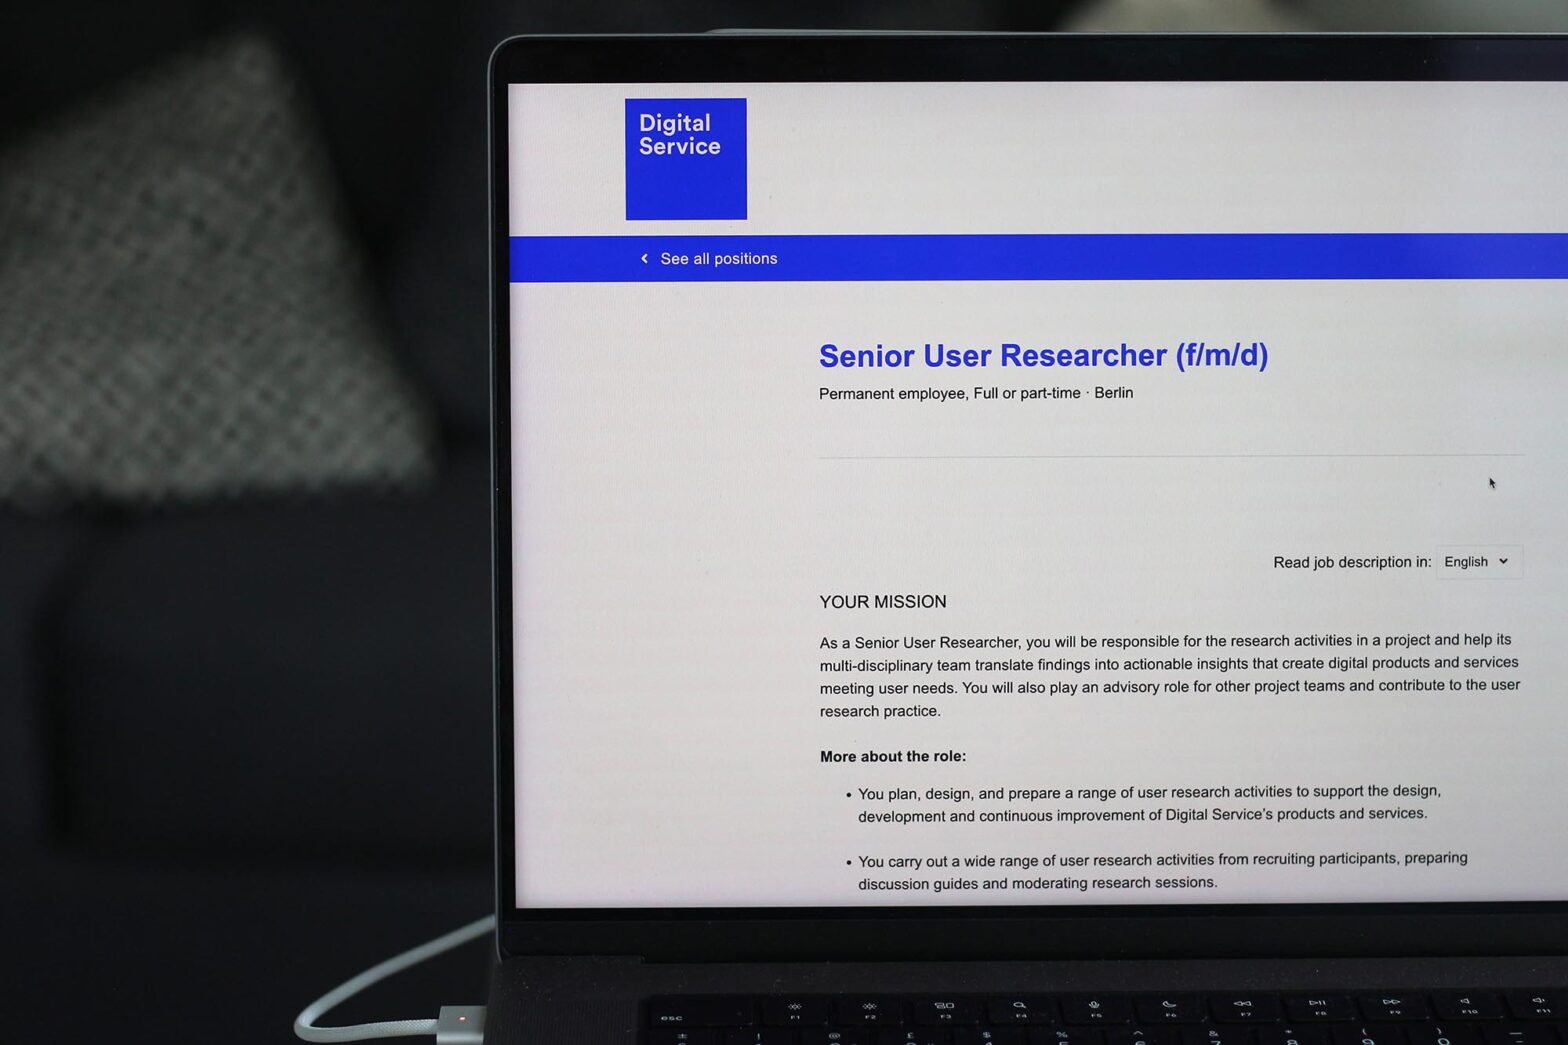 Screen showing the job description for a senior user researcher role